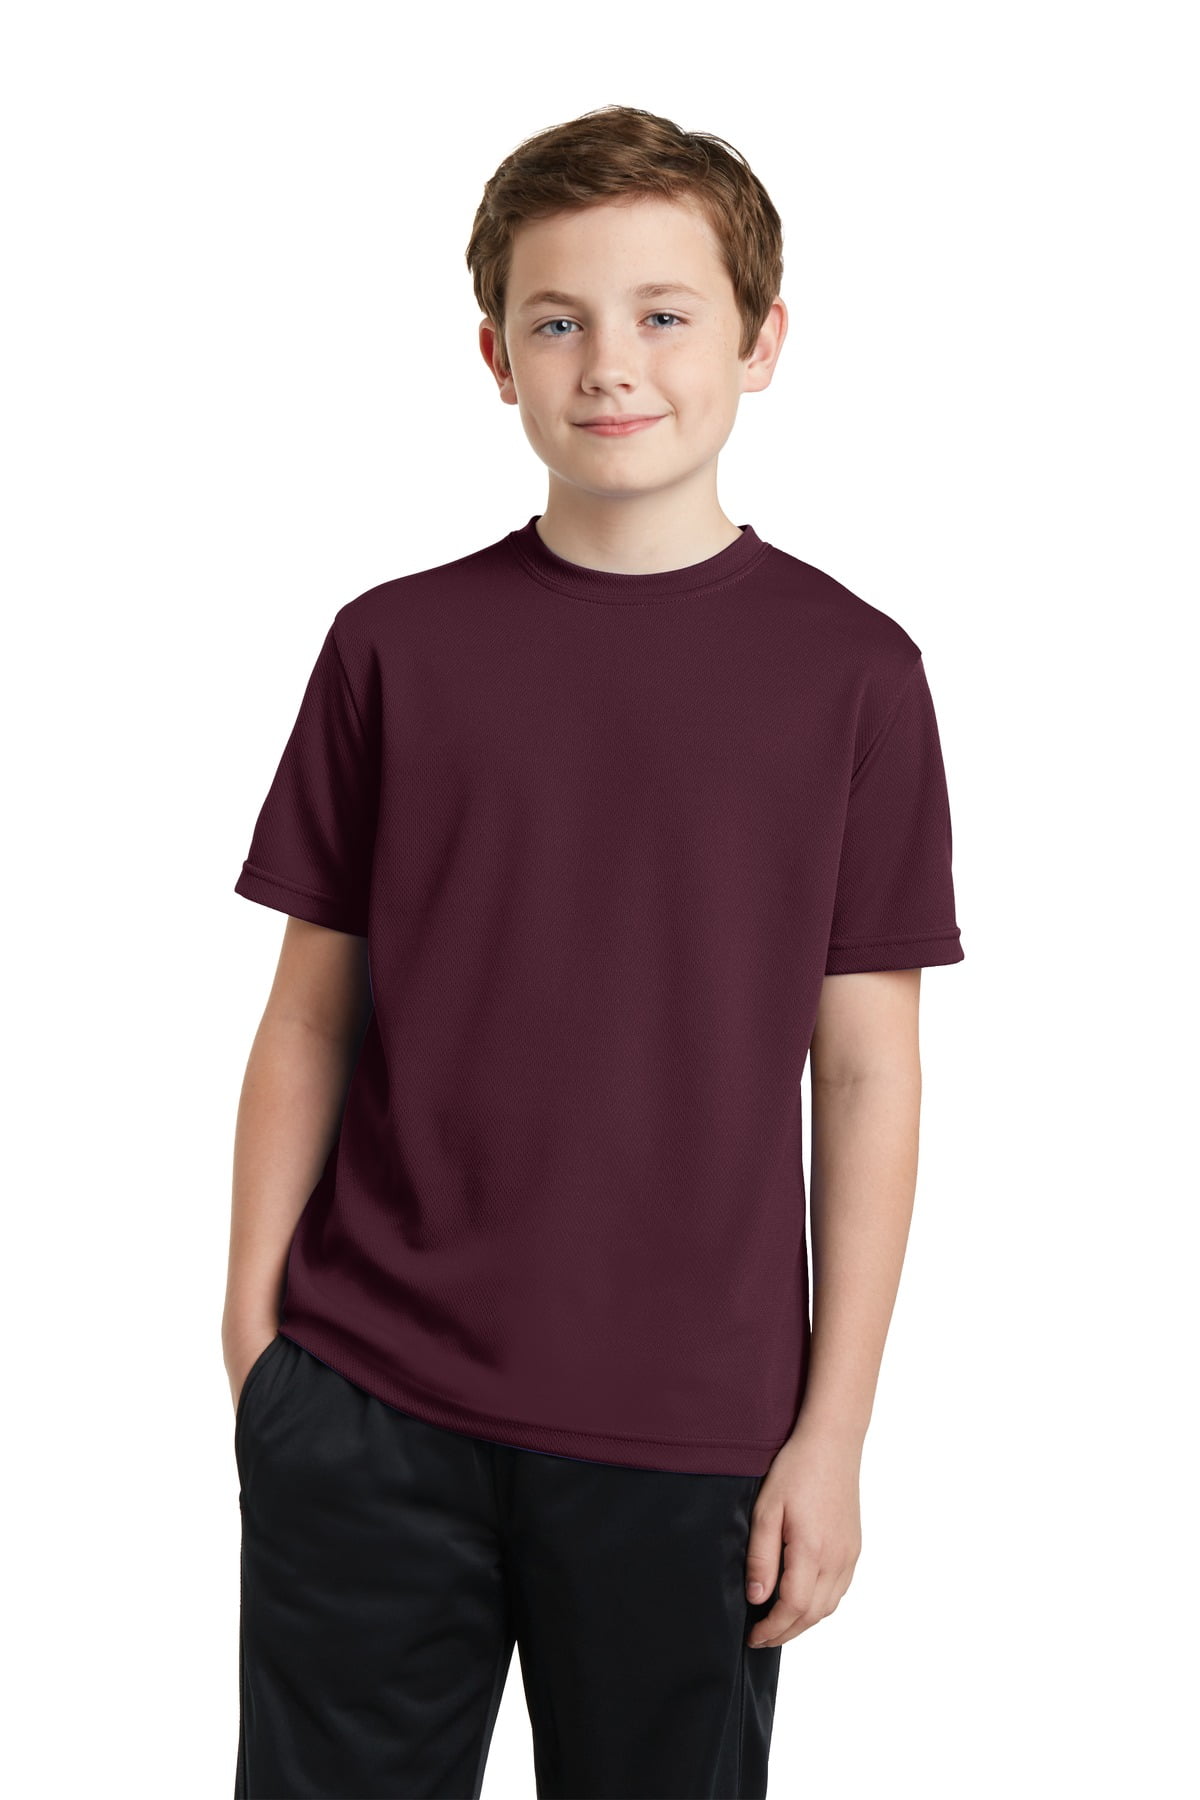 Sport Tek Teen Unisex Regular Plain Short Sleeves T-Shirt True 